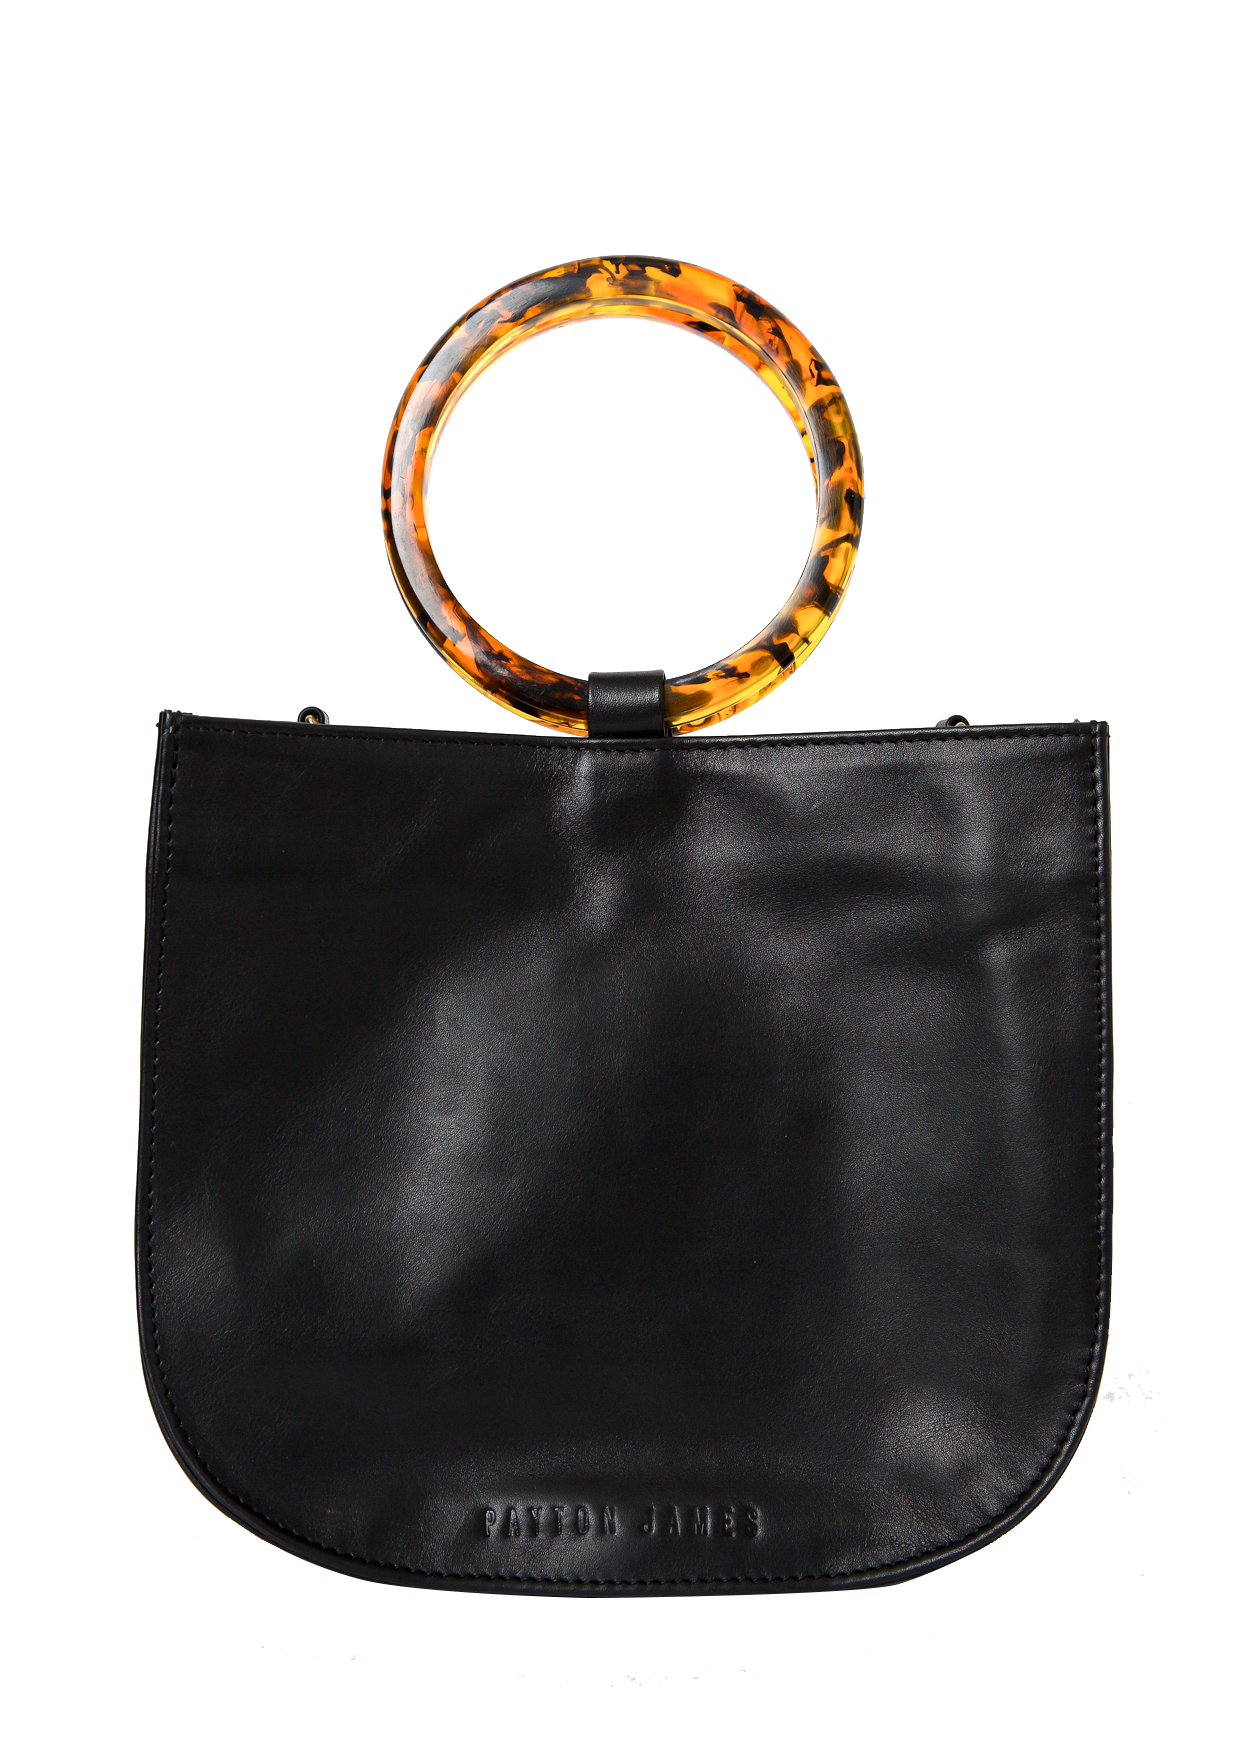 The Luna Bag in Black